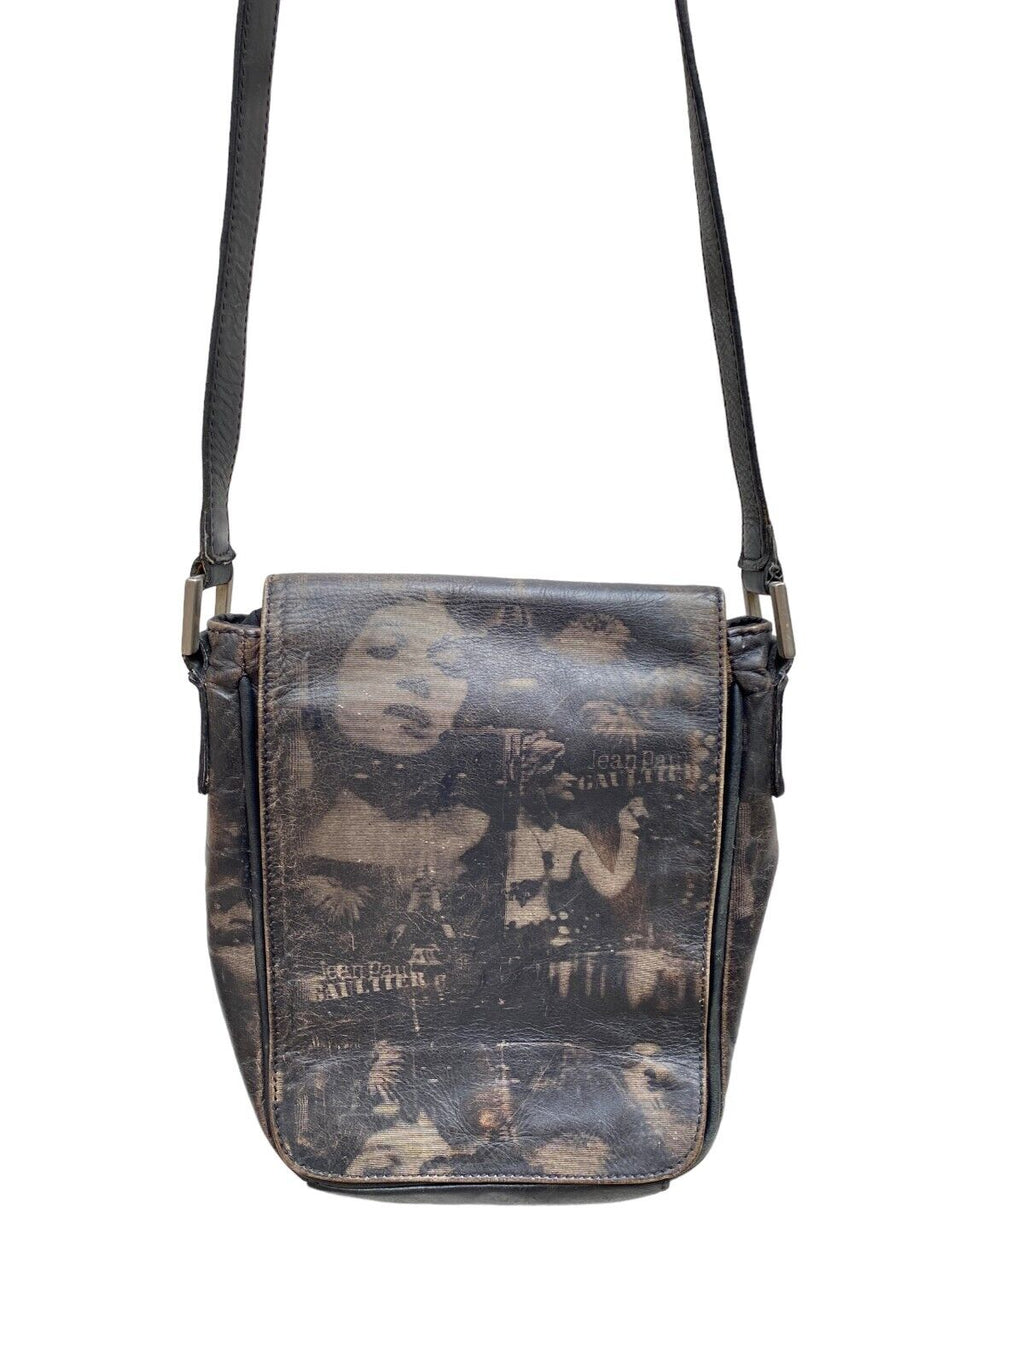 Vintage   Marlene Dietrich Grey Leather Bag